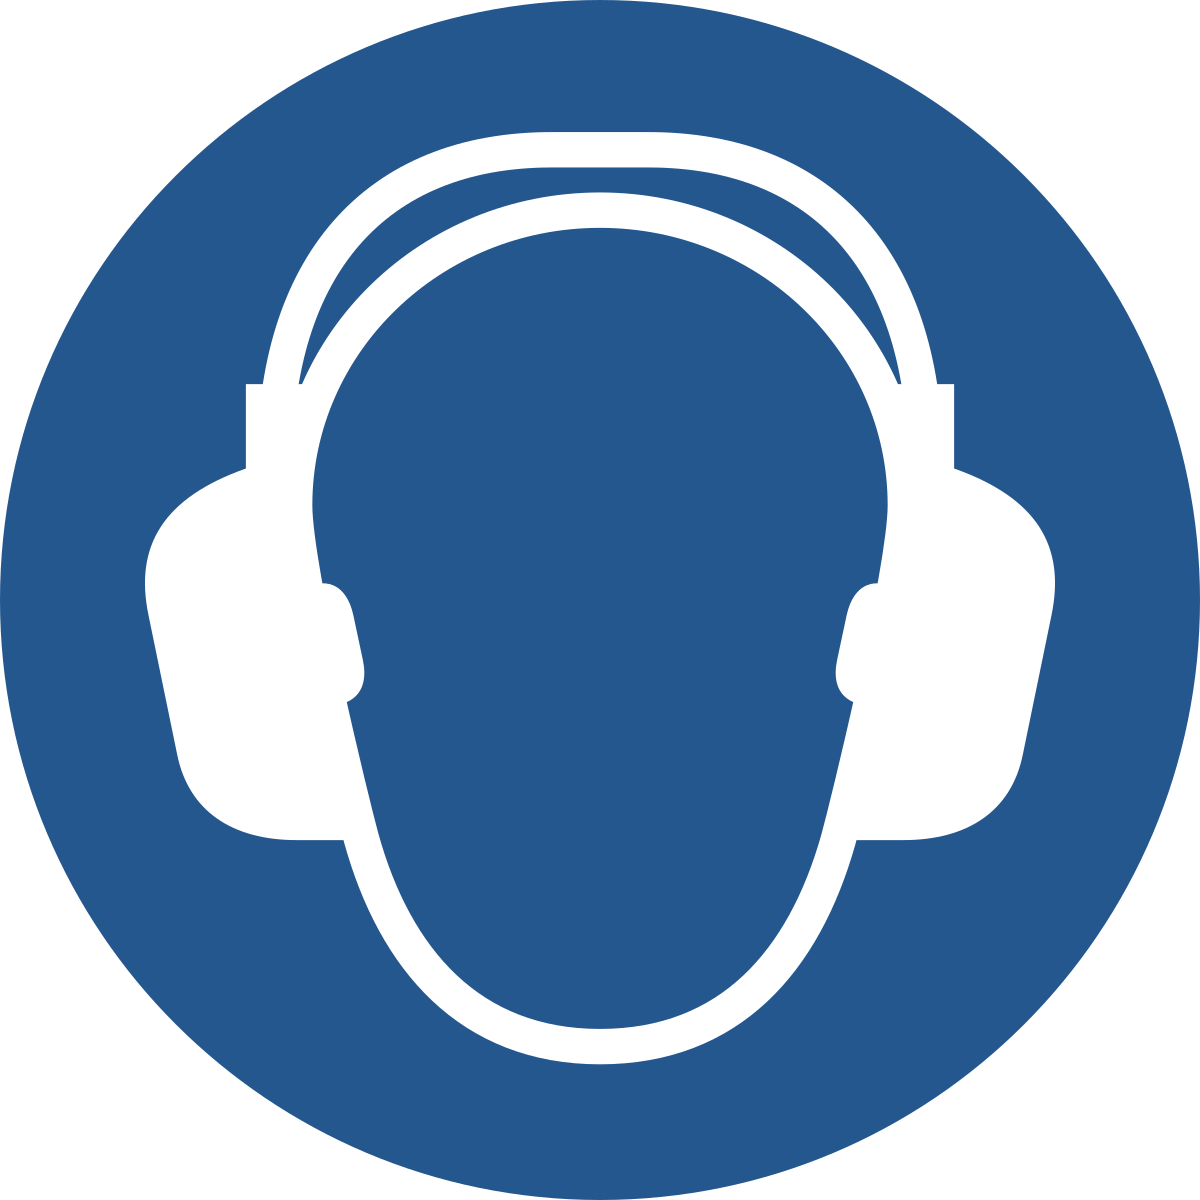 PELTOR Gehörschutz mit Bügel Ohrenschützer Hörschutz Schutz Gehör DIN/EN 352-1 